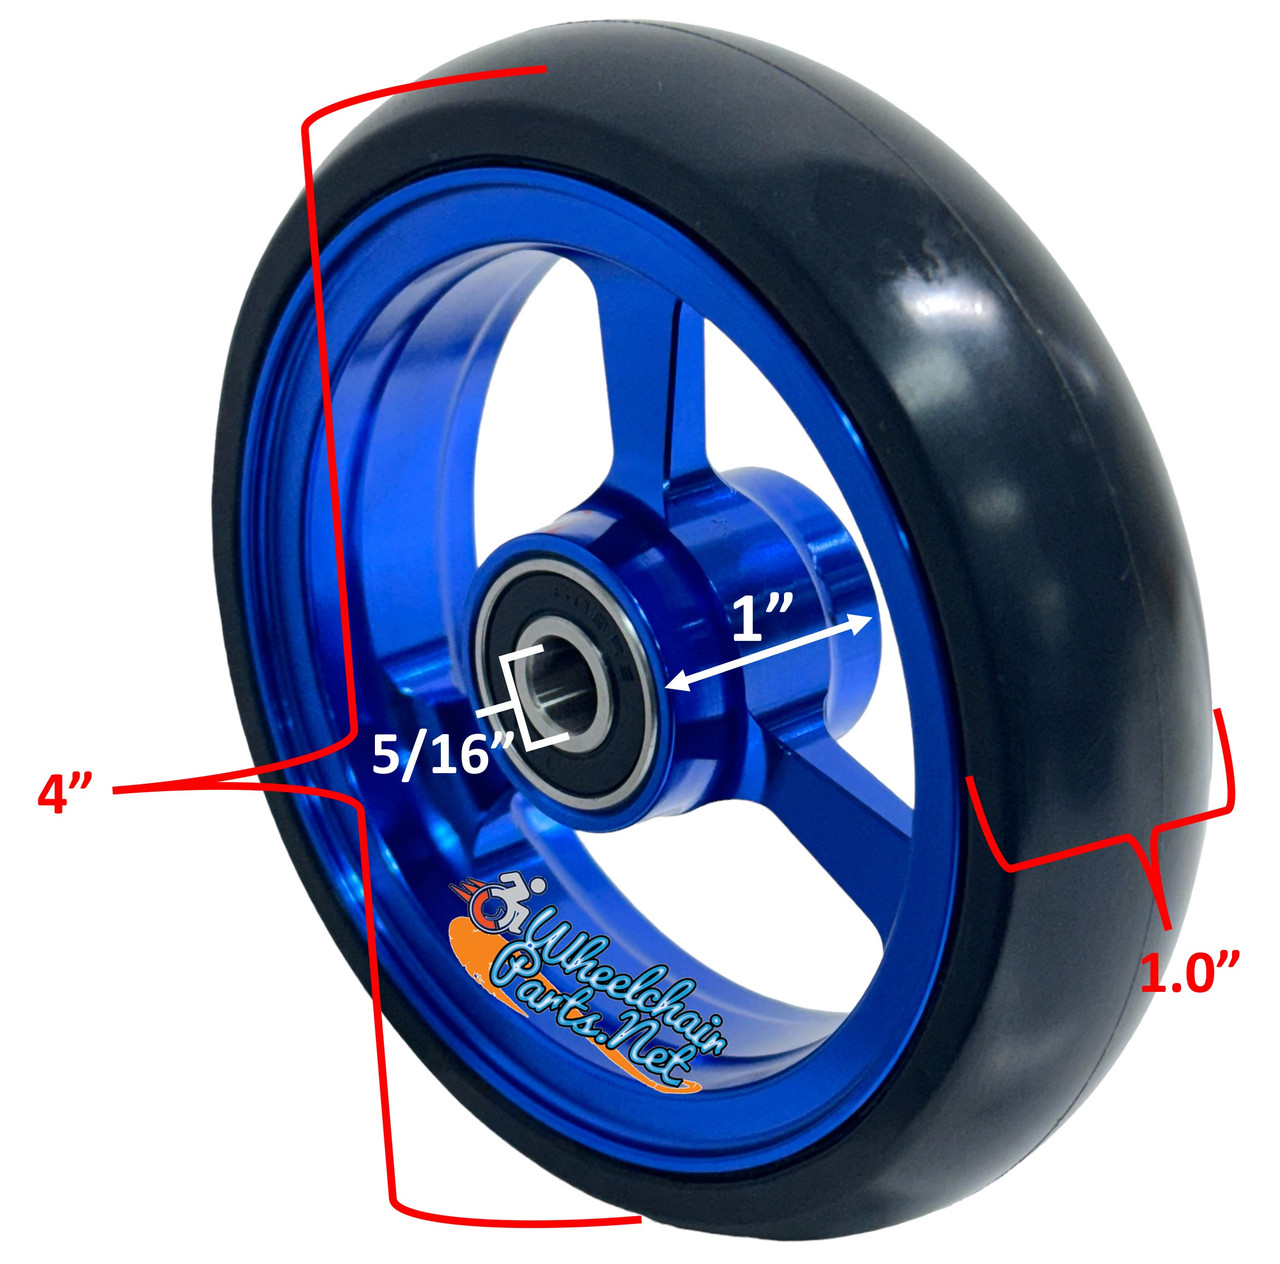 4" X 1" Aluminum 3 Spoke Wheel, Blue Rim / Soft Urethane Tire with 5/16" bearings.